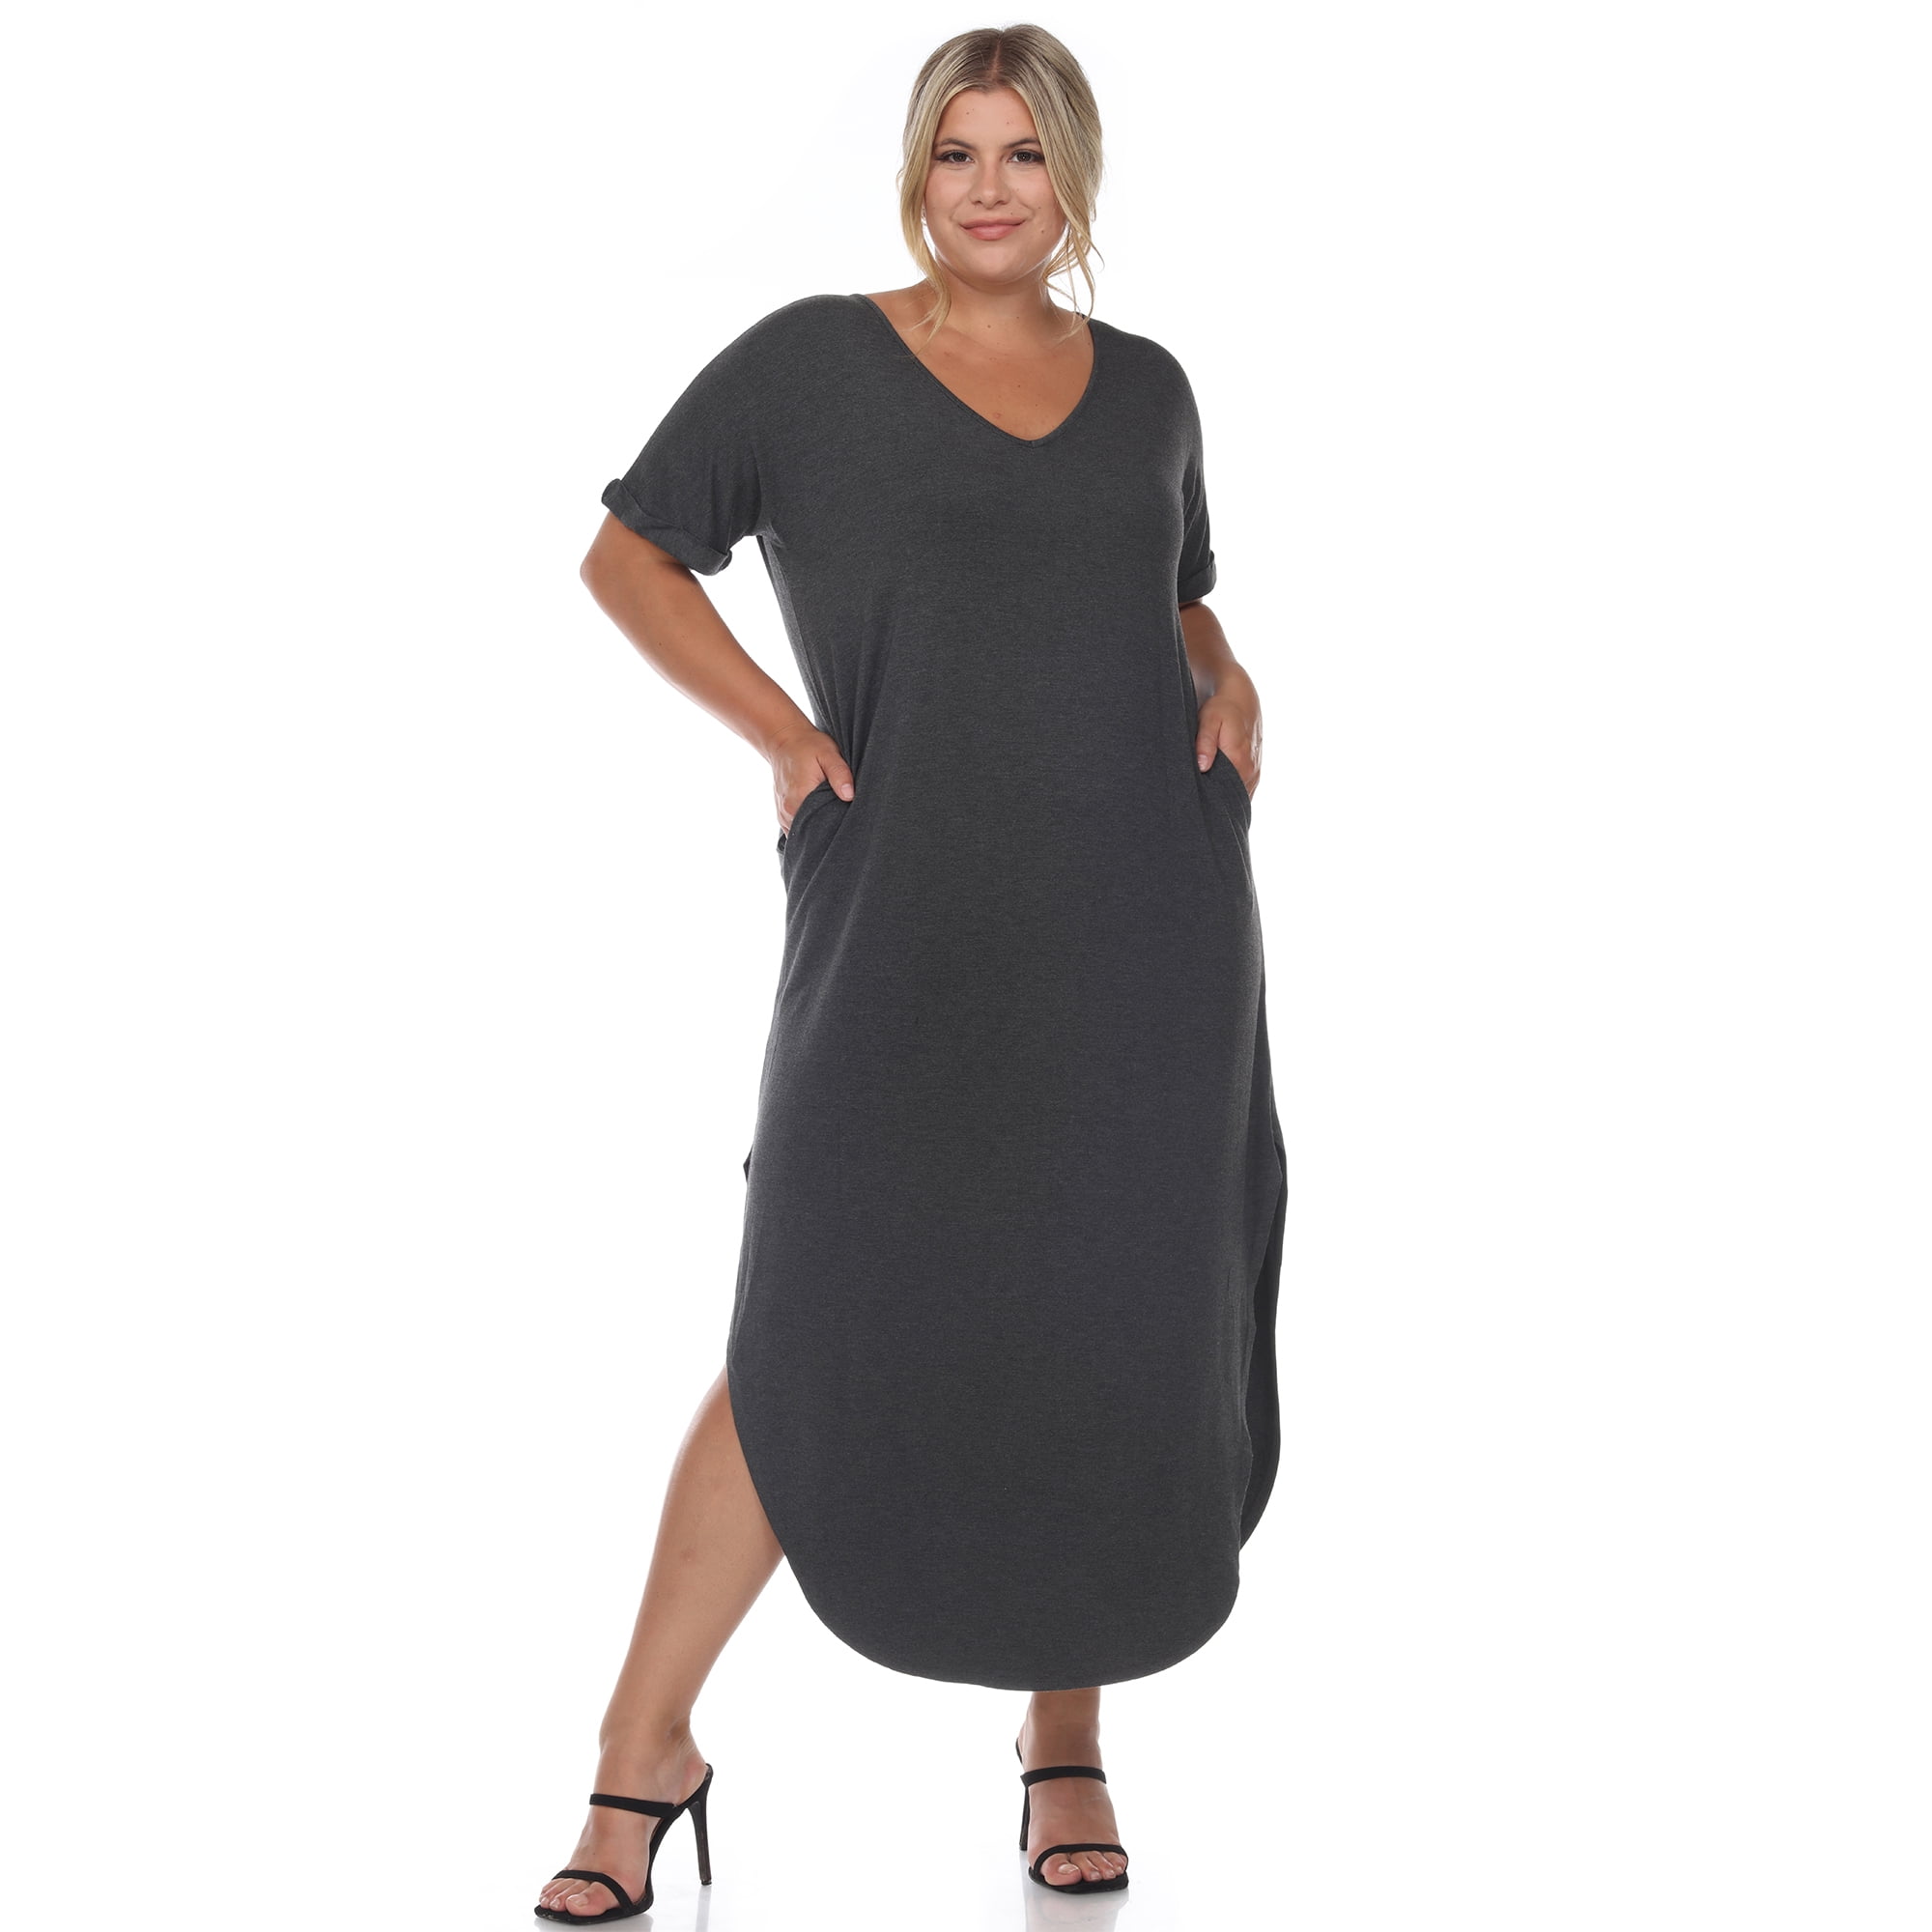 White Women's Plus Size Short Sleeve V-neck T-shirt Maxi Dress with Pockets - Walmart.com